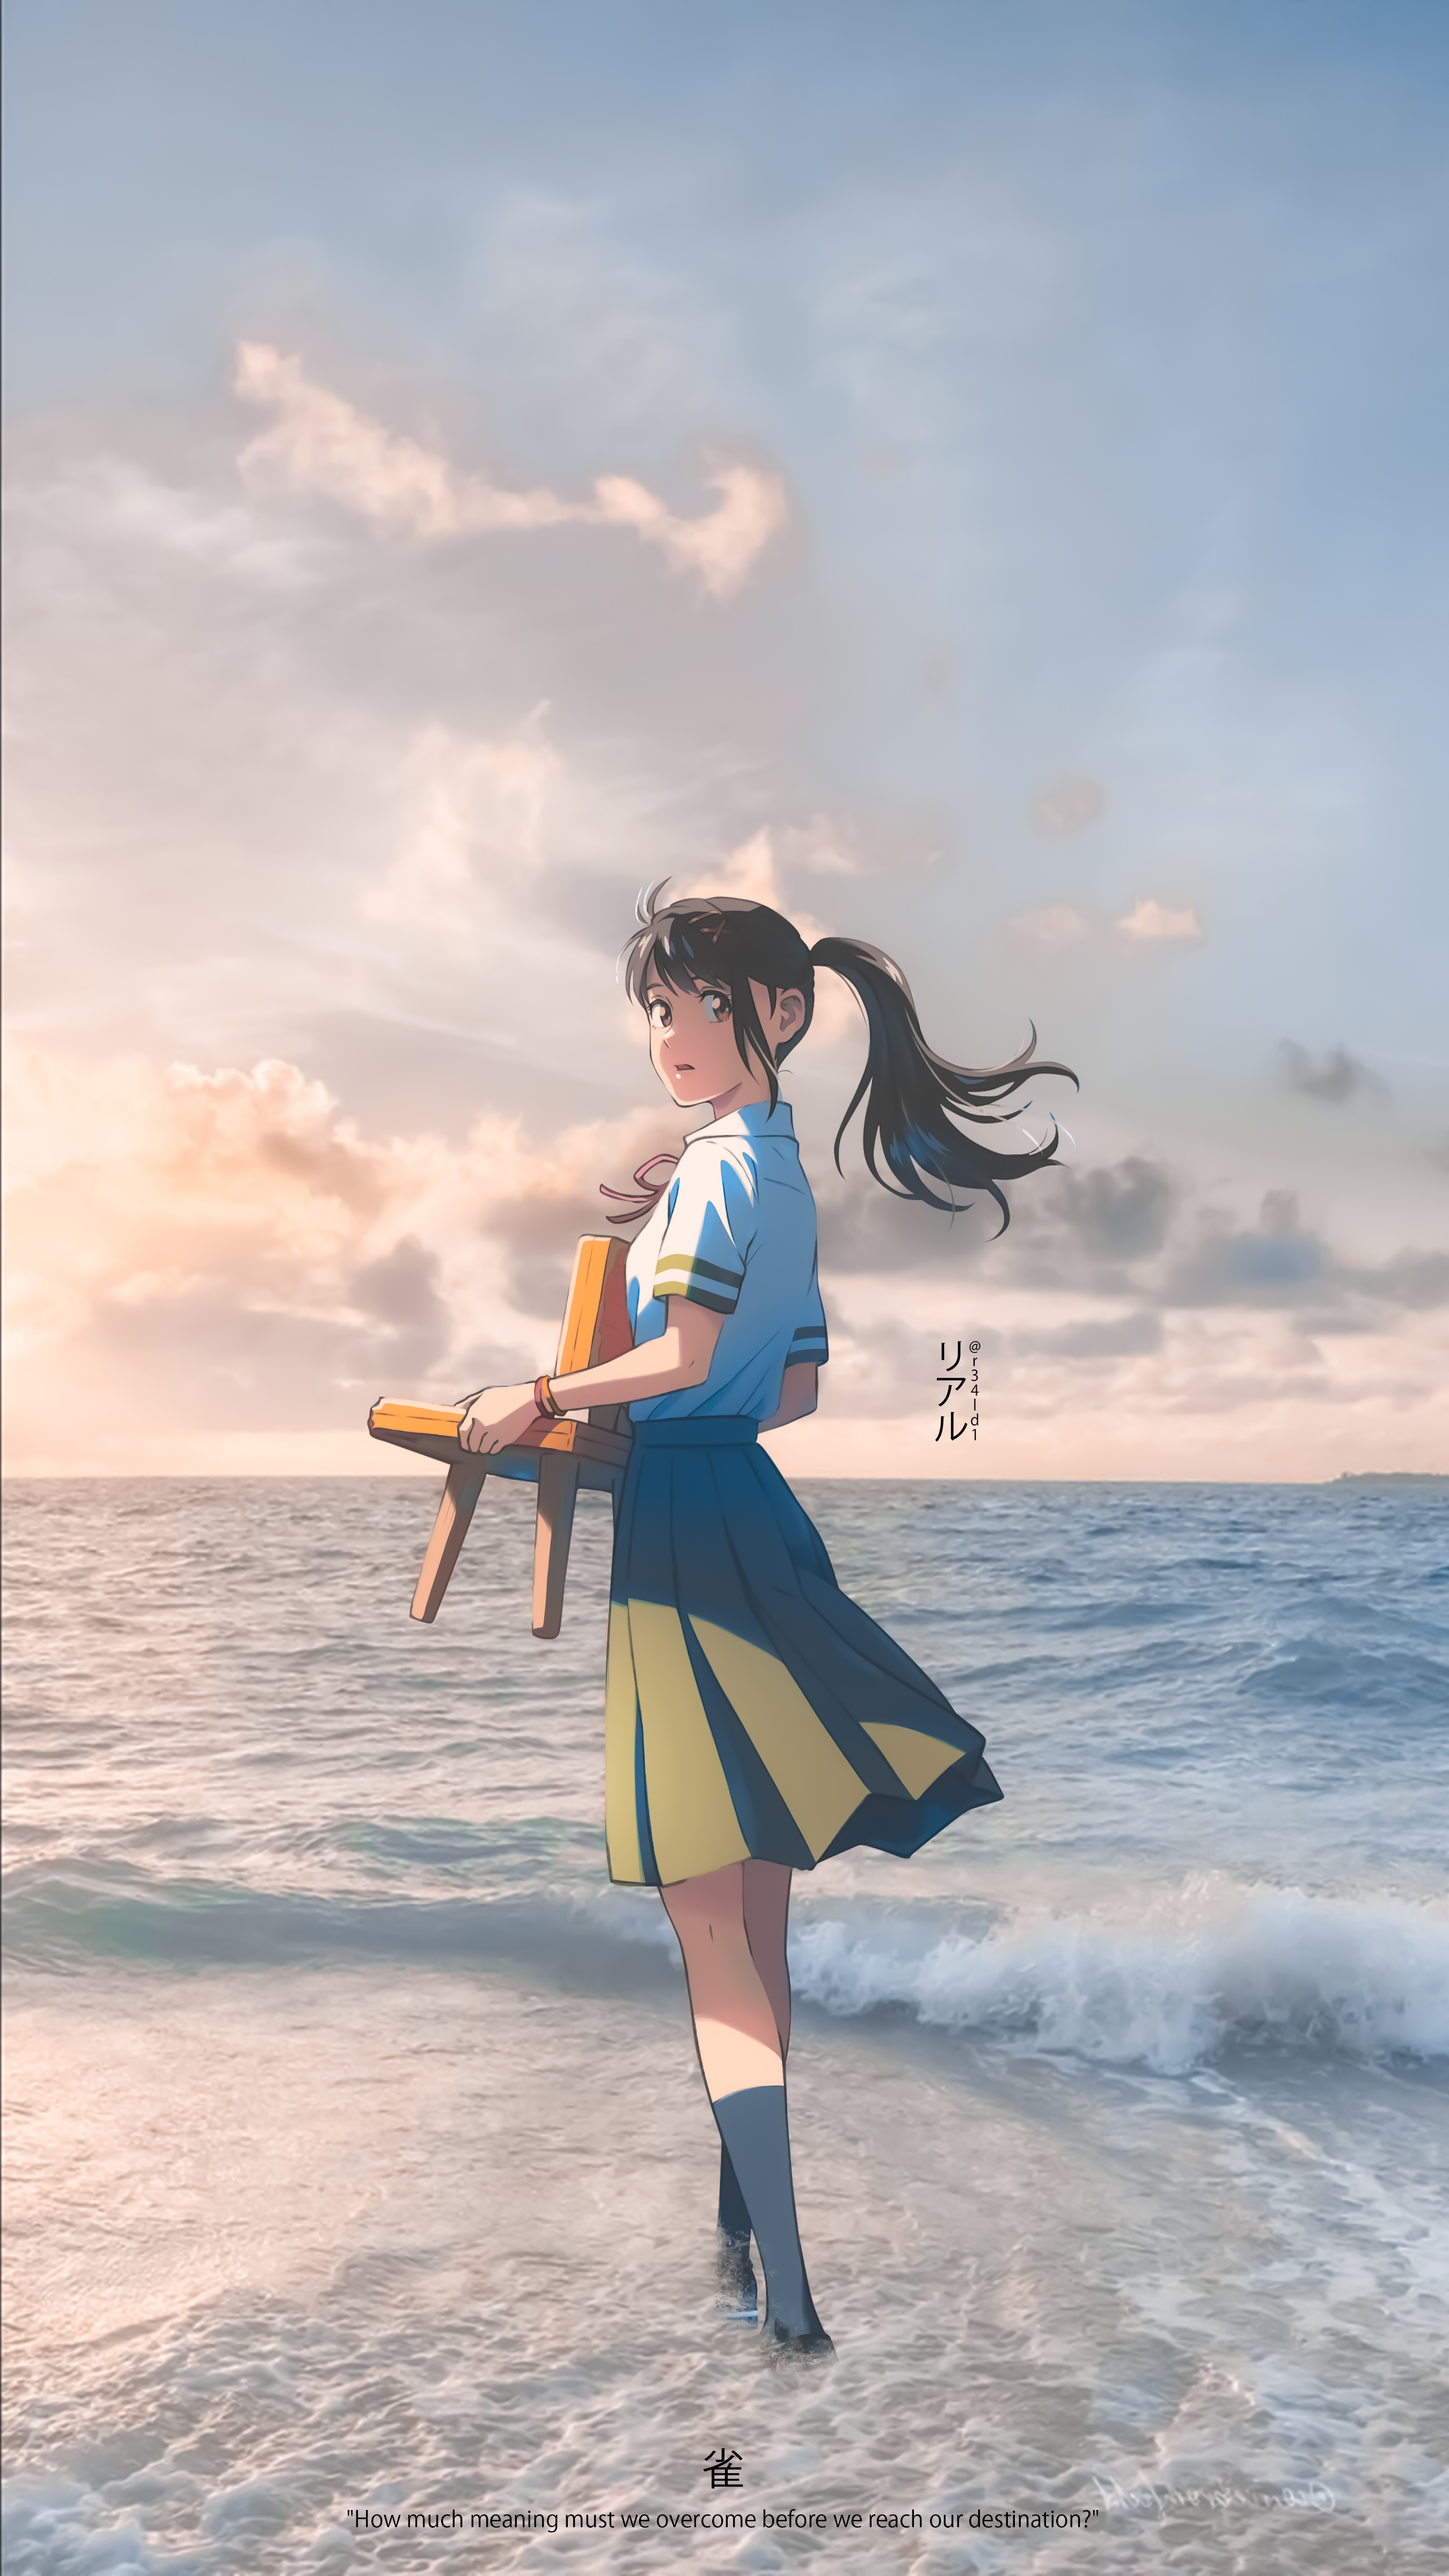 Anime Art #02  8K Wallpaper by Lizhi609 on DeviantArt